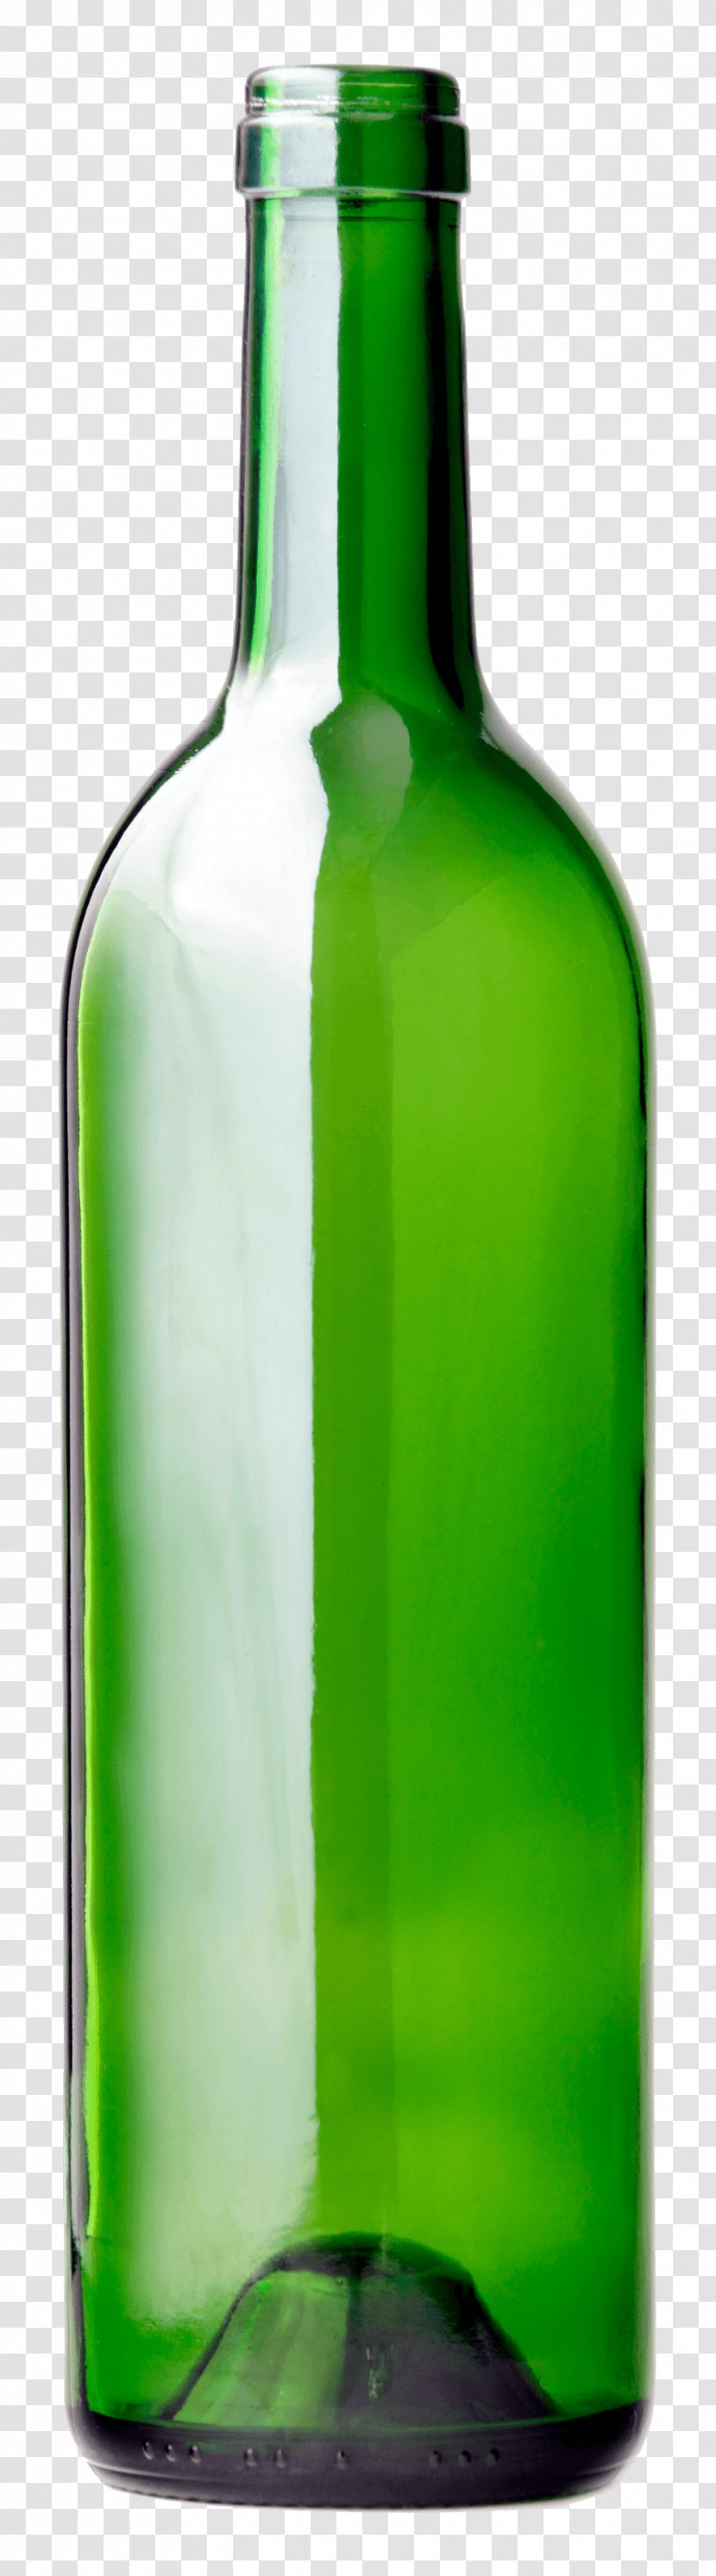 Red Wine Bottle Butylka - Beverage Can - Glass Green Image Transparent PNG